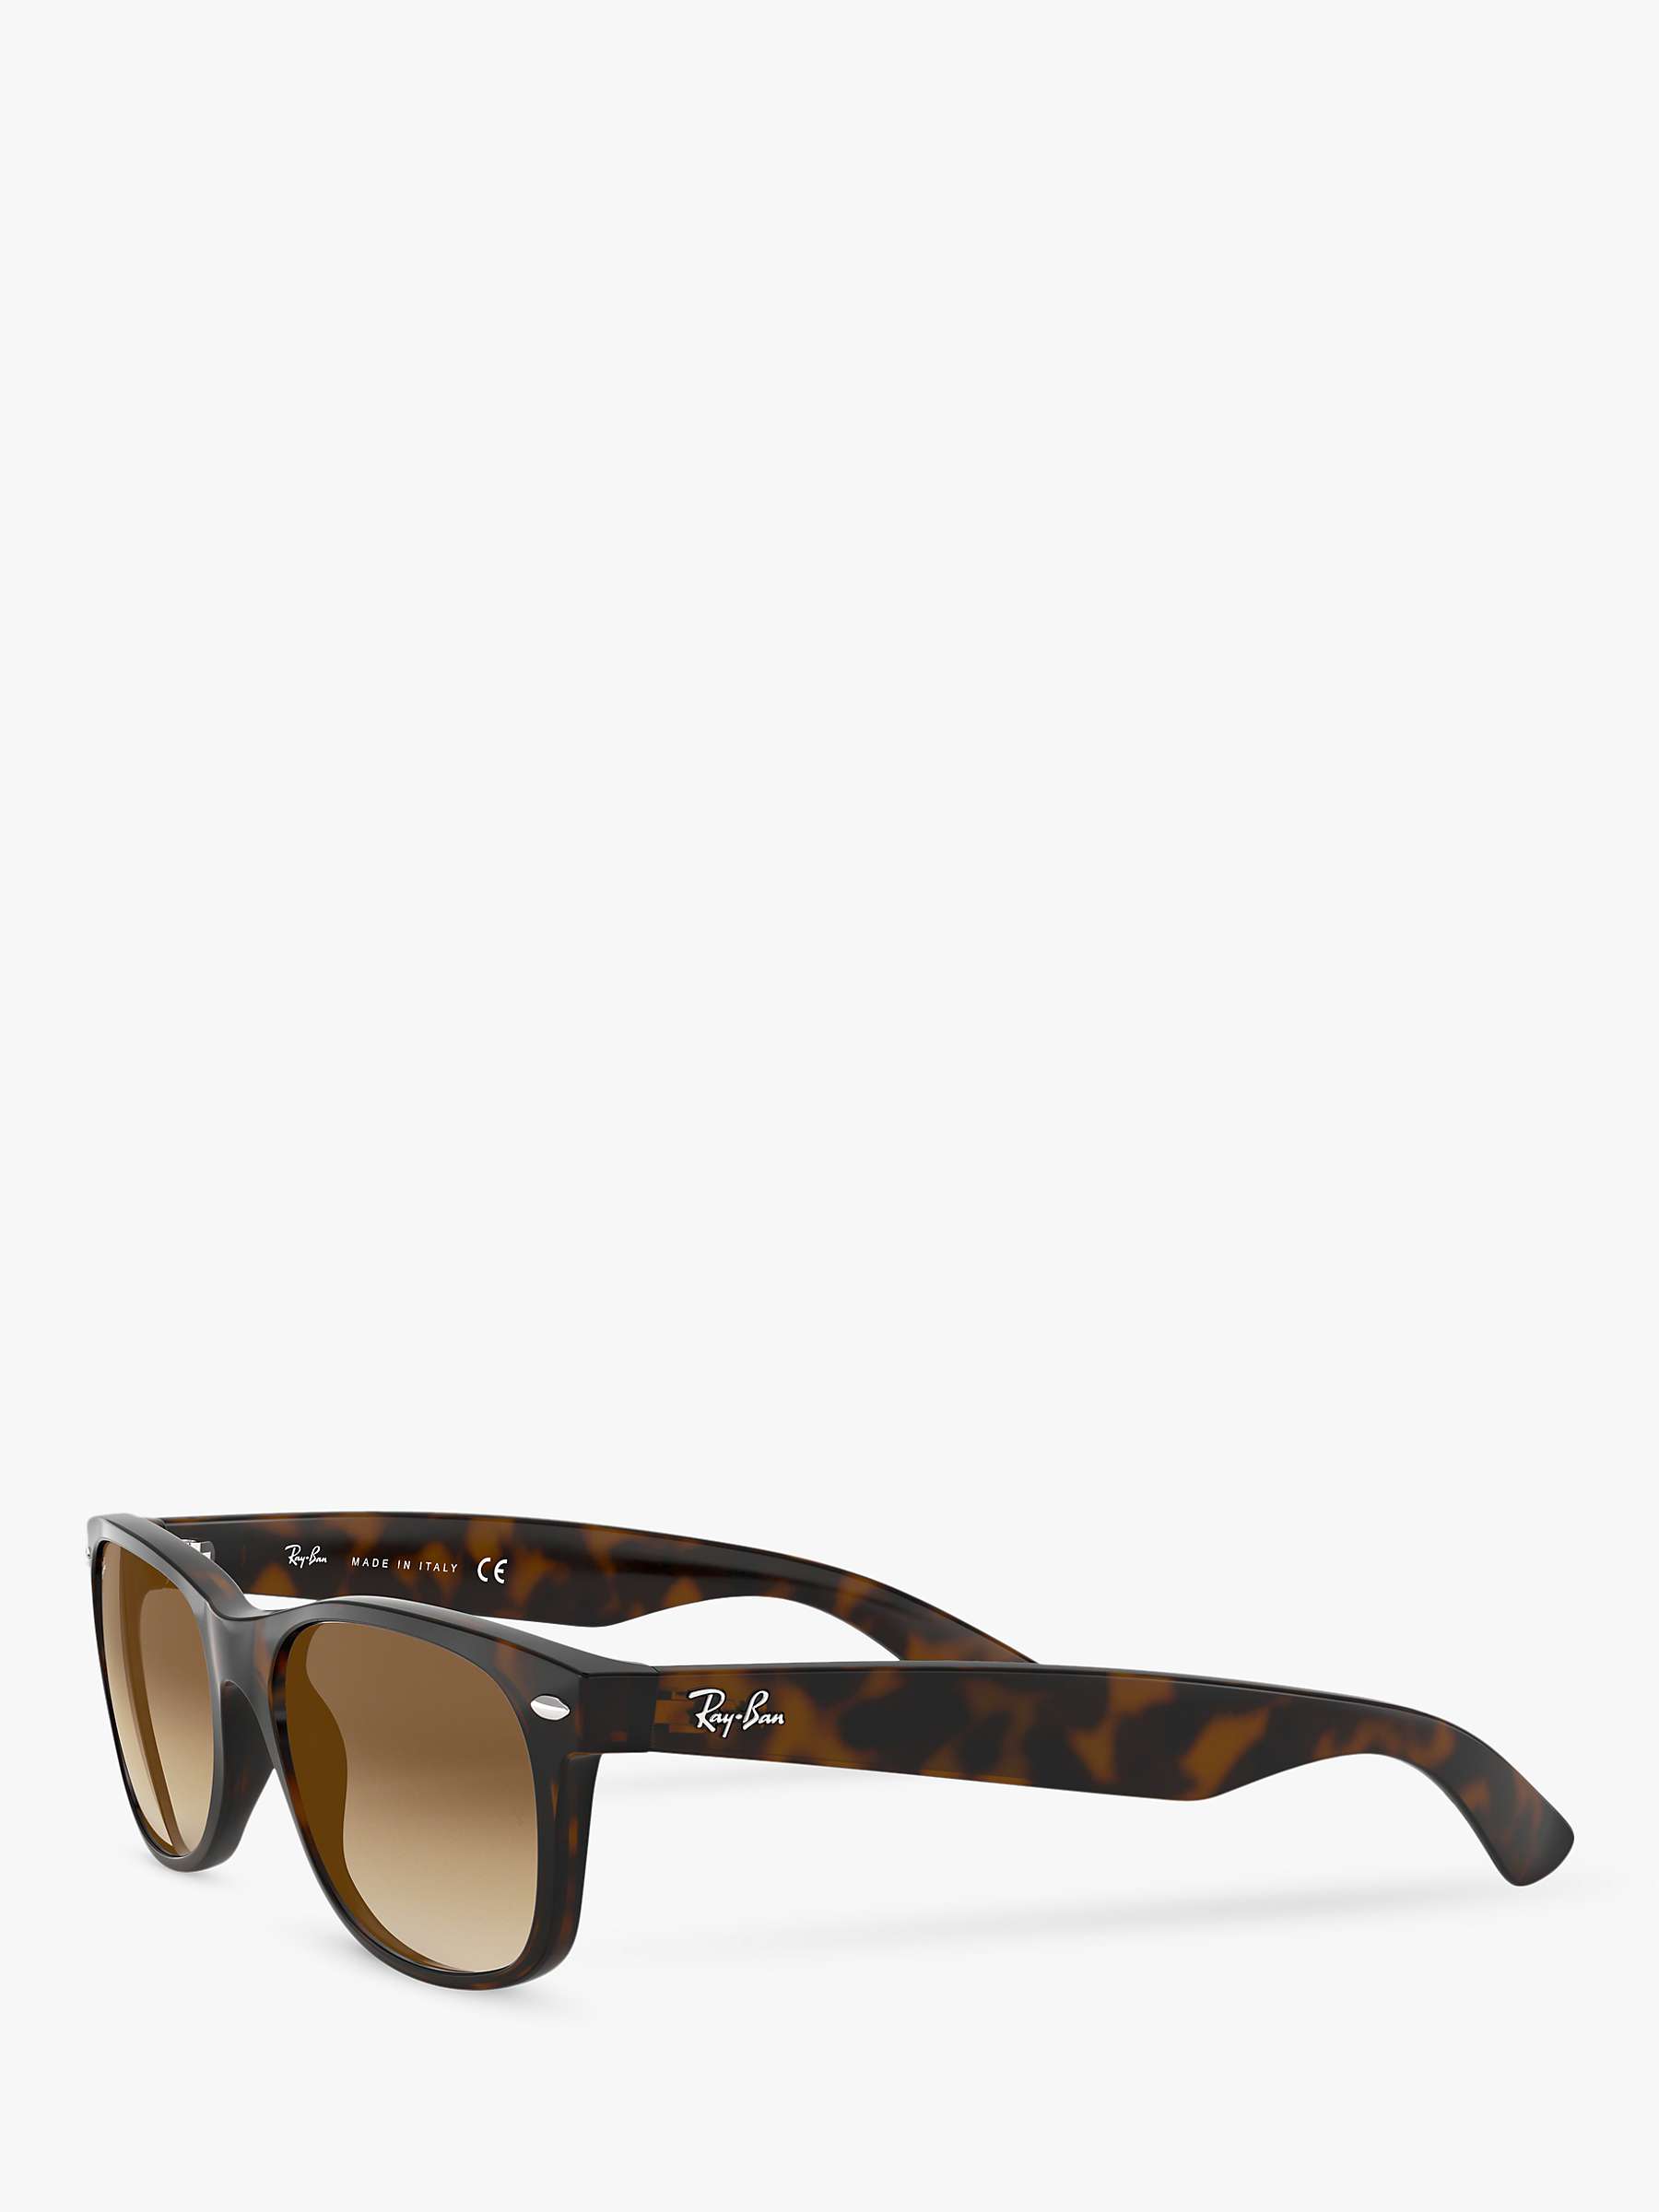 Buy Ray-Ban RB2132 Men's New Wayfarer Square Sunglasses, Light Havana Online at johnlewis.com